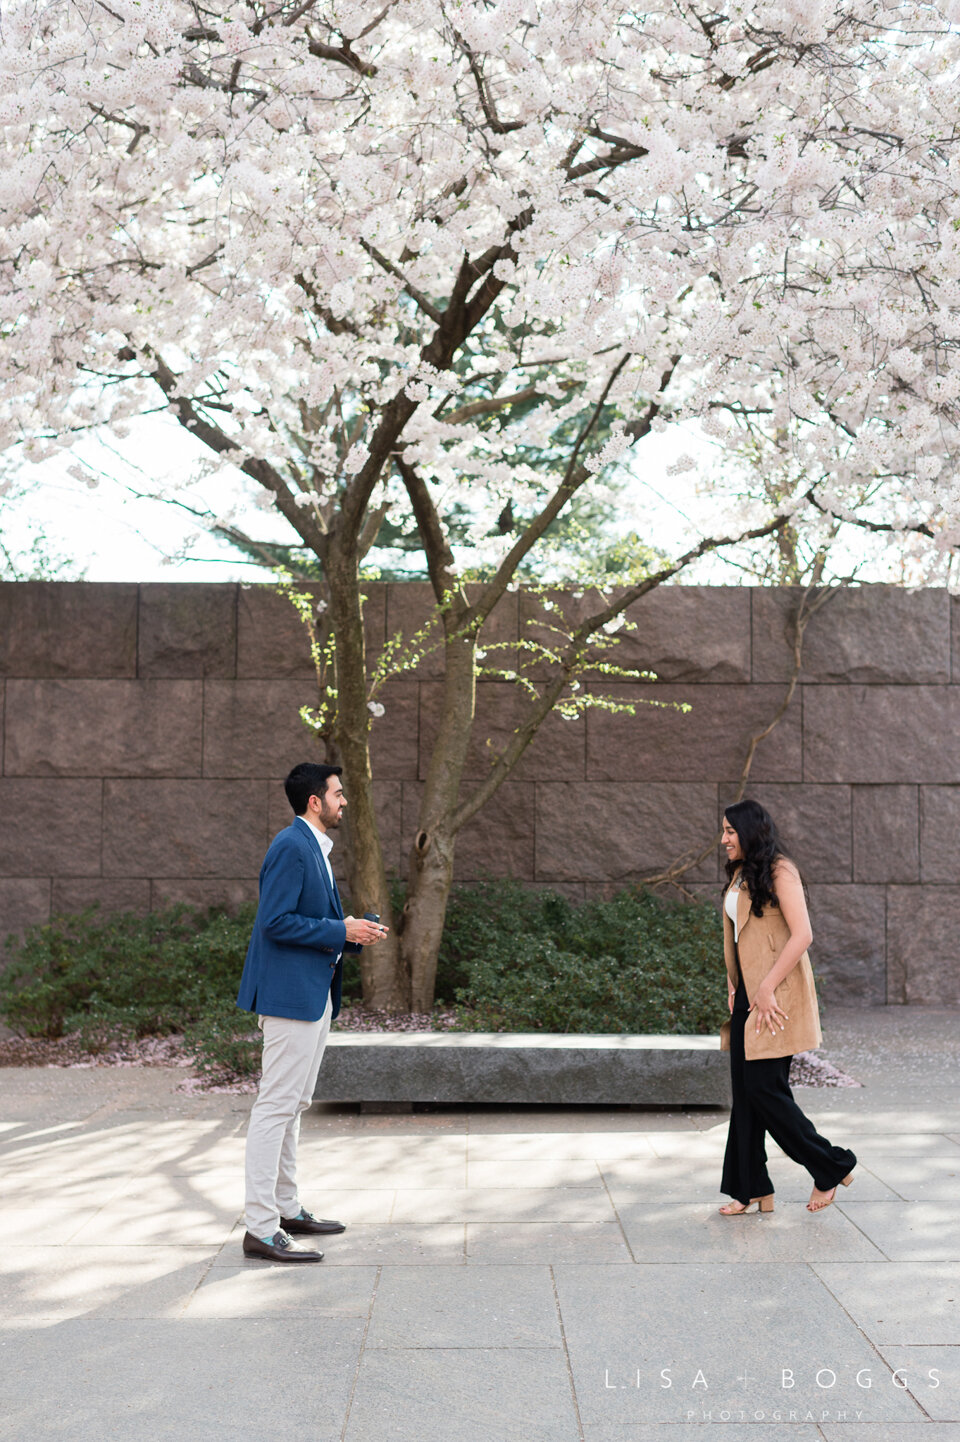 a&k-dc-cherry-blossom-proposal-engagement-photos-washington-dc-cherry-blossoms-02.jpg